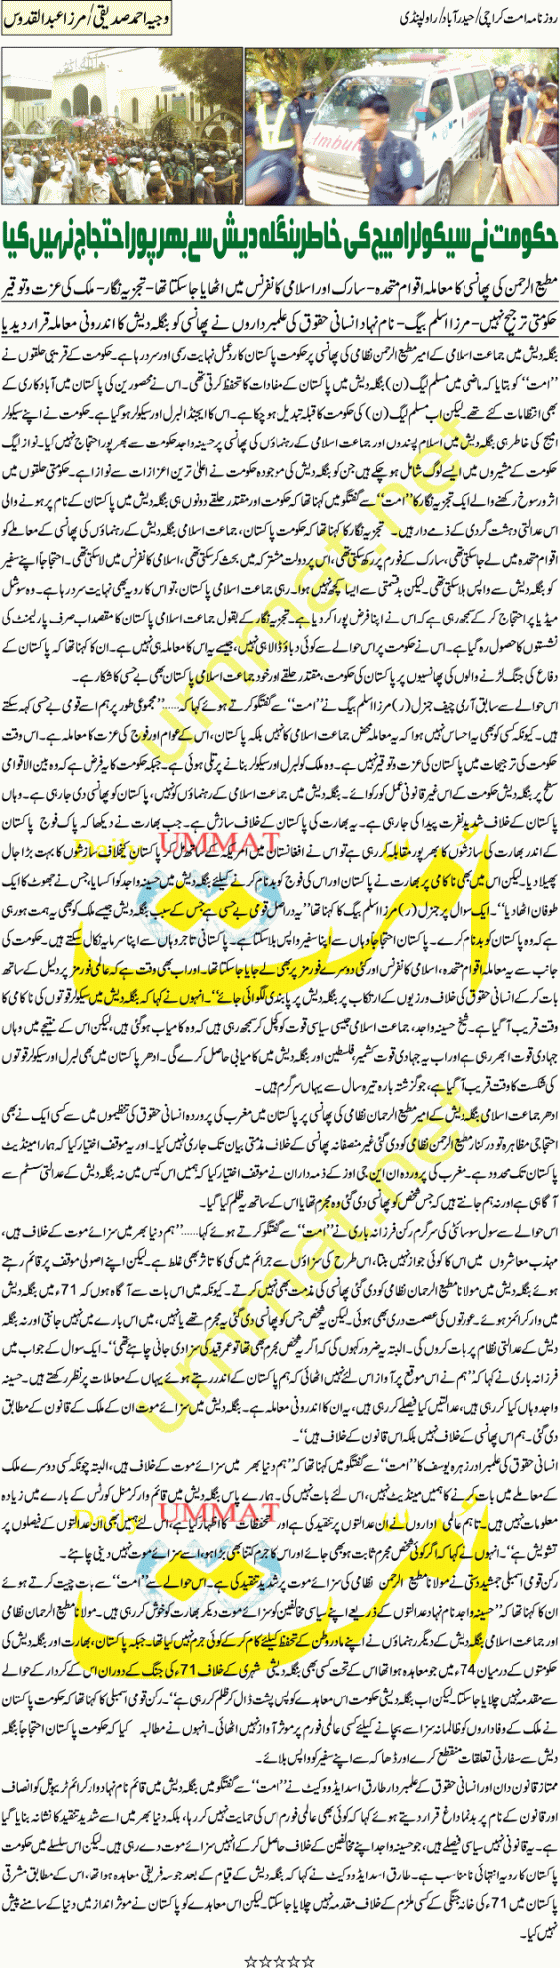 BANGLA_Mutiur Rehman-7_N-Sharif not protested to promote Secular Image_UMT_12-05-16